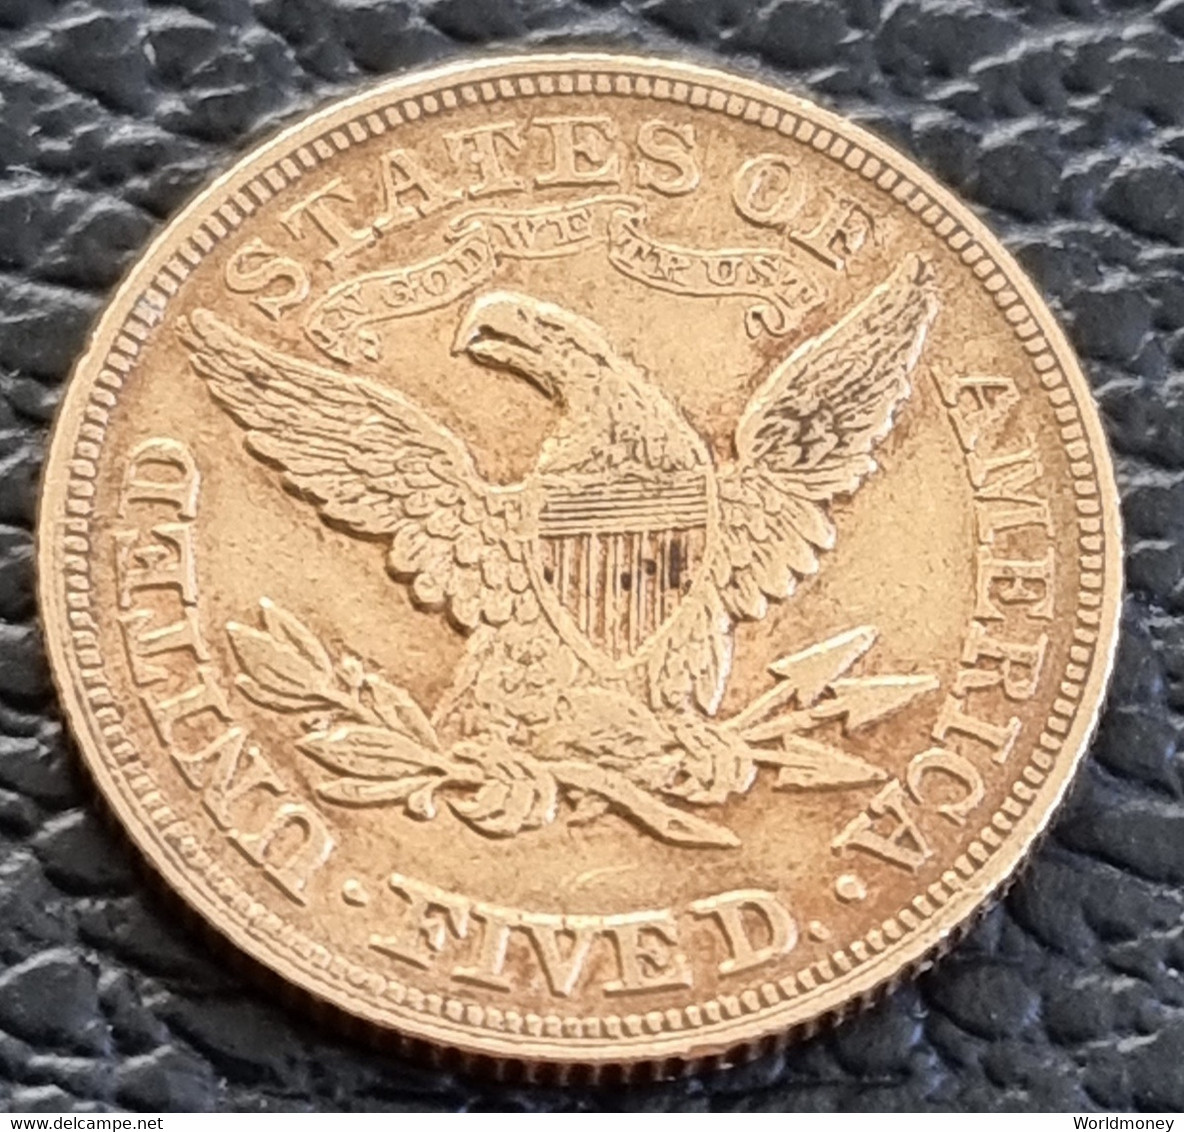 United States 5 Dollars 1880 (Gold) - 5$ - Half Eagles - 1866-1908: Coronet Head (tête Couronnée)